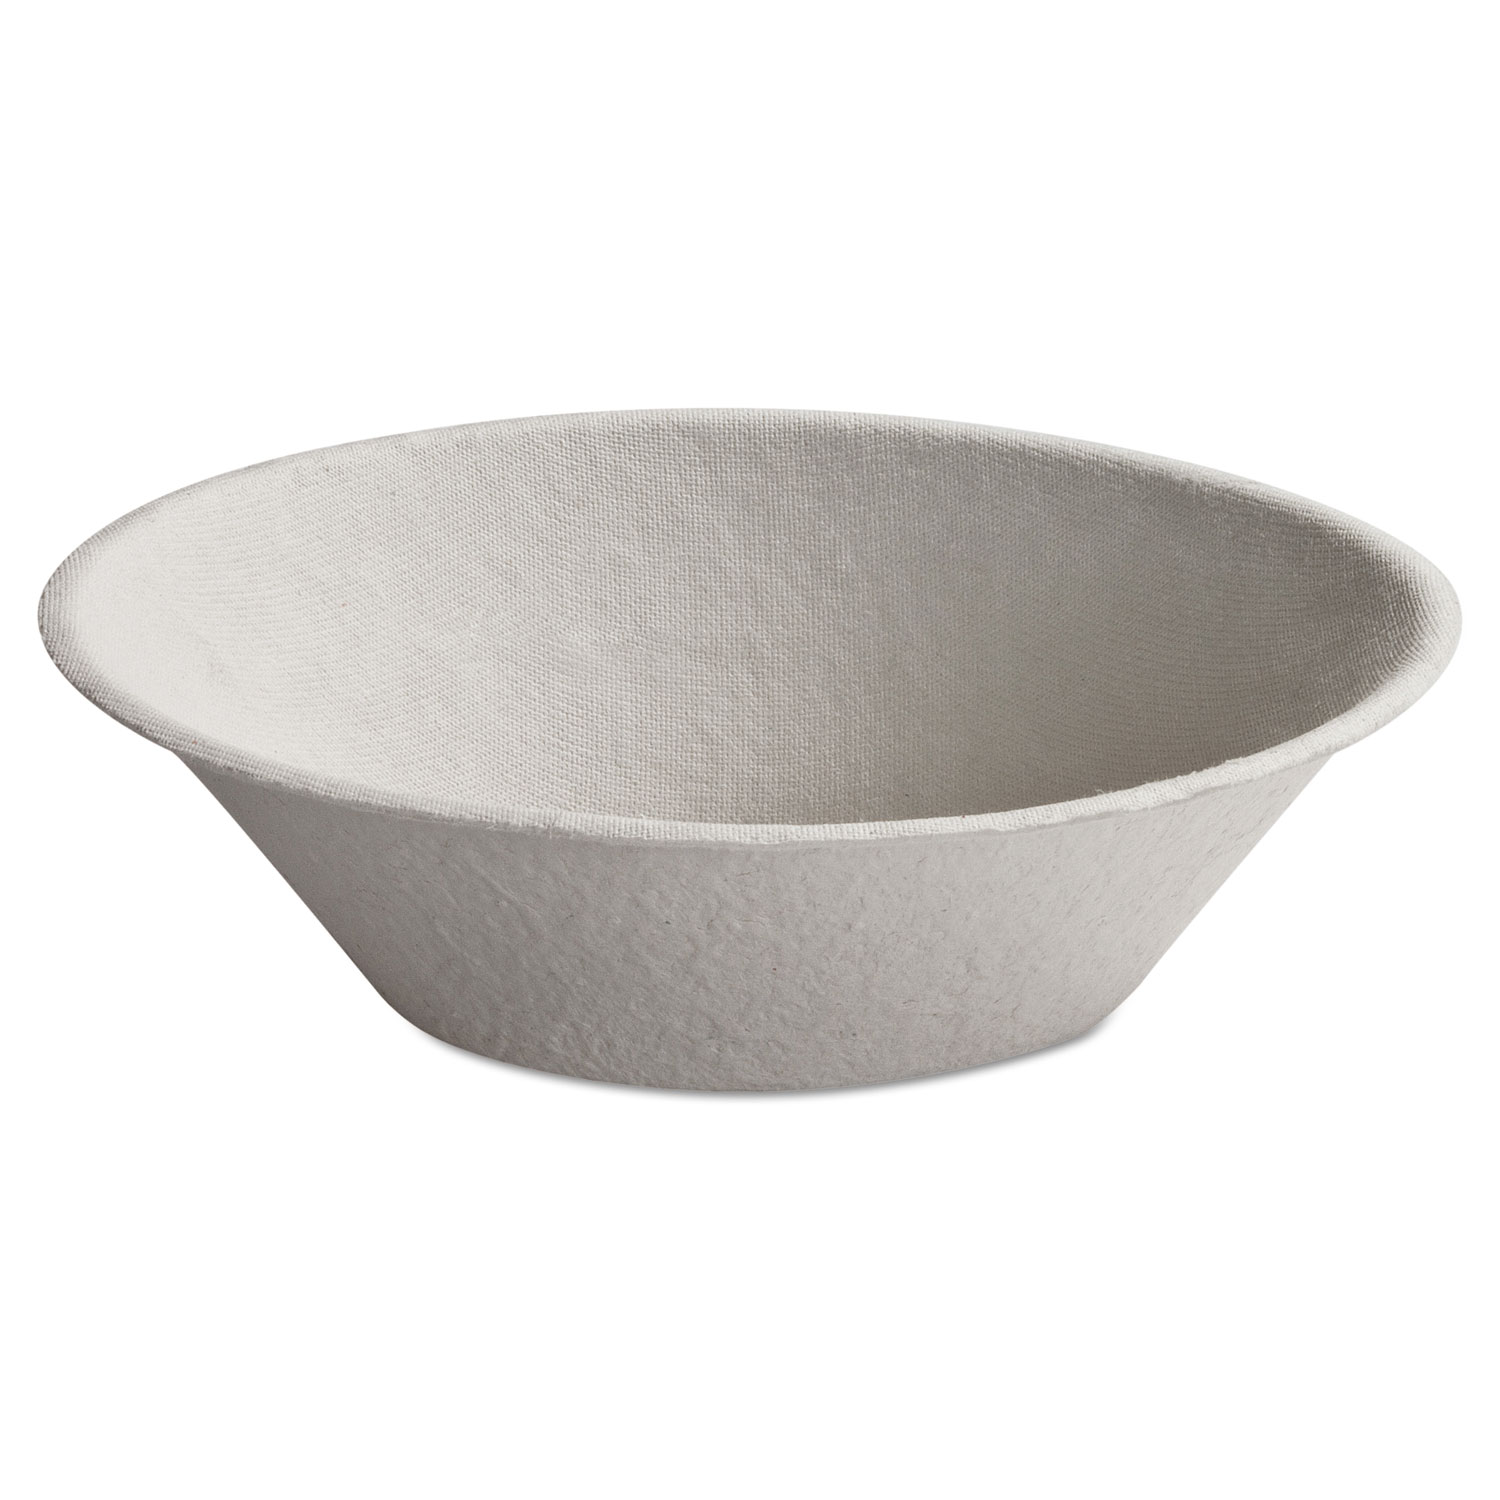  Chinet 21060 Savaday Molded Fiber Bowls, 45 oz, White, Round, 500/Carton (HUH21060) 